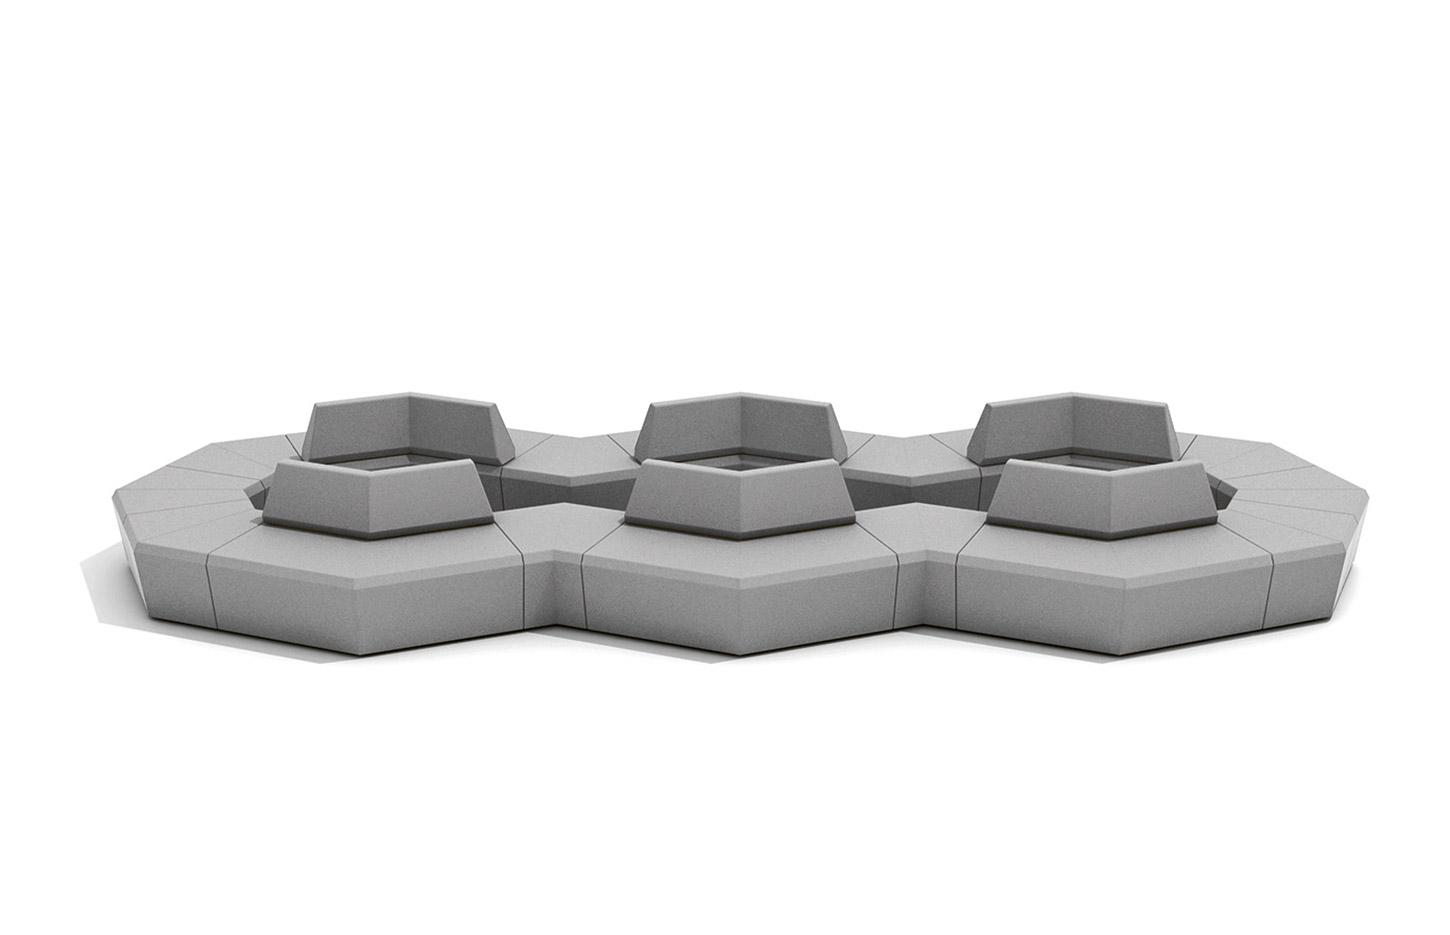 Canapés modulaires modules assises accoudoirs hauts bas tissu similicuir, gamme Gavea - France Bureau